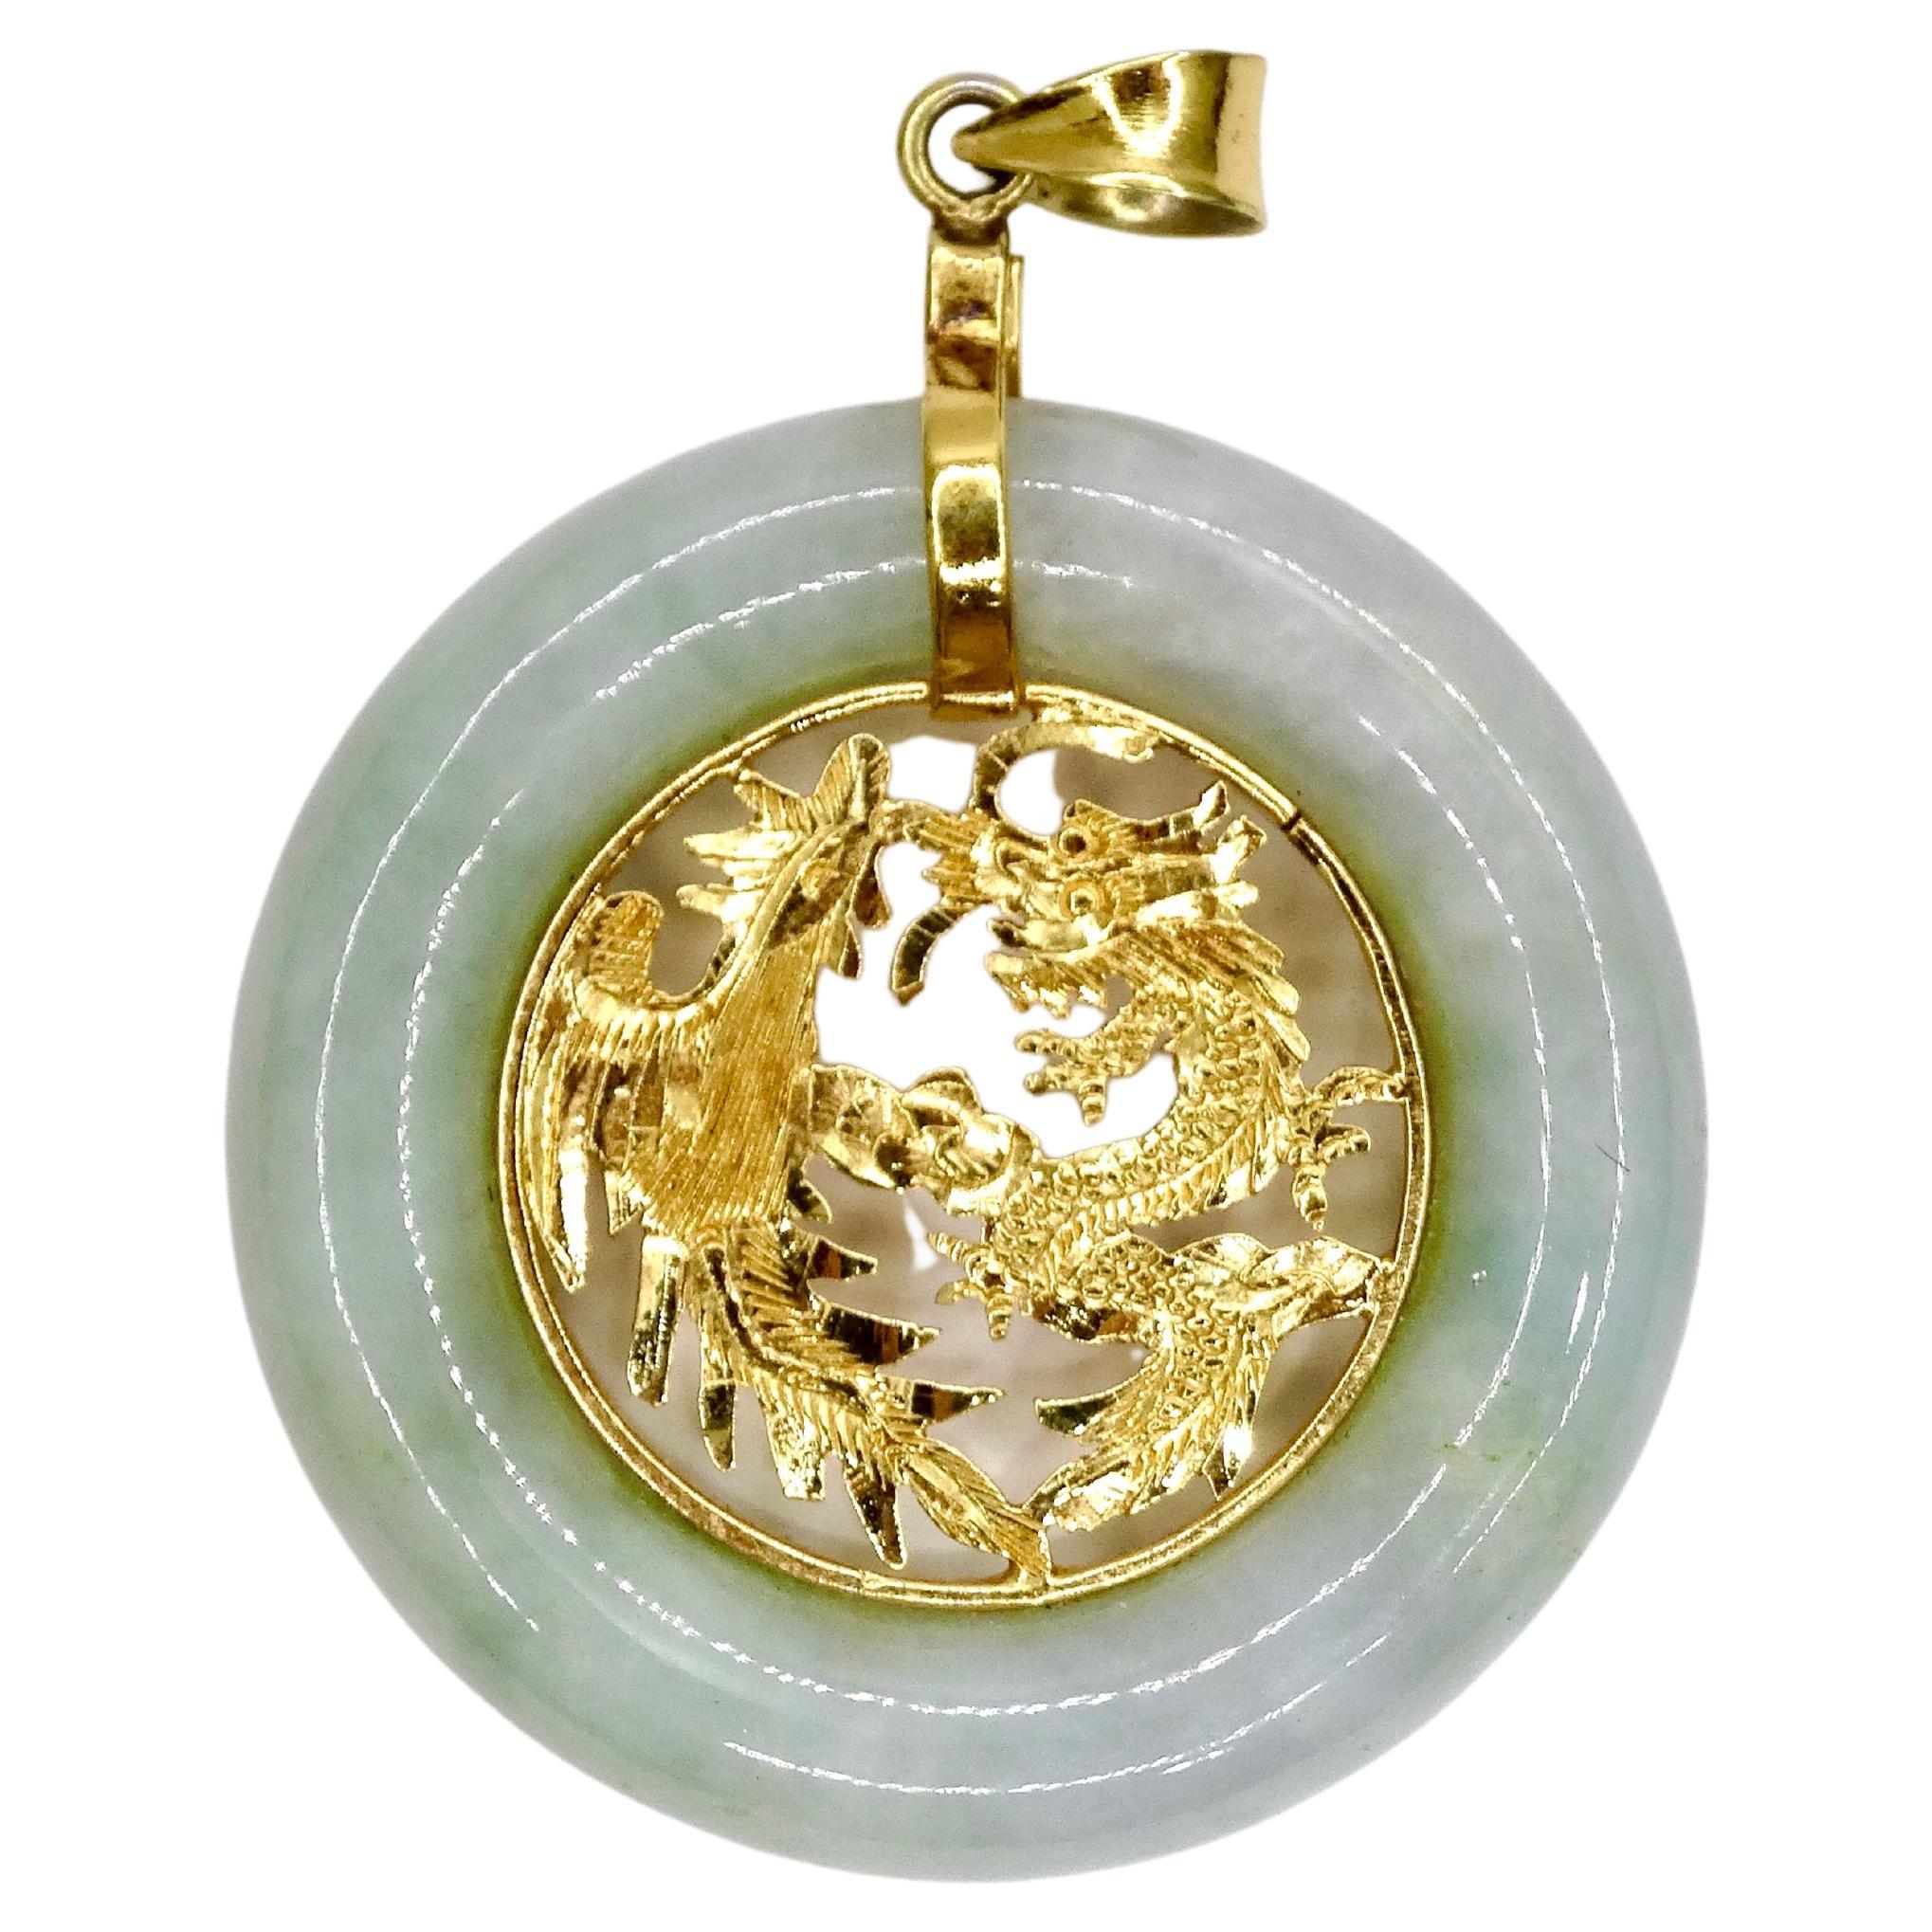 Grand pendentif dragon en or 24 carats et jade